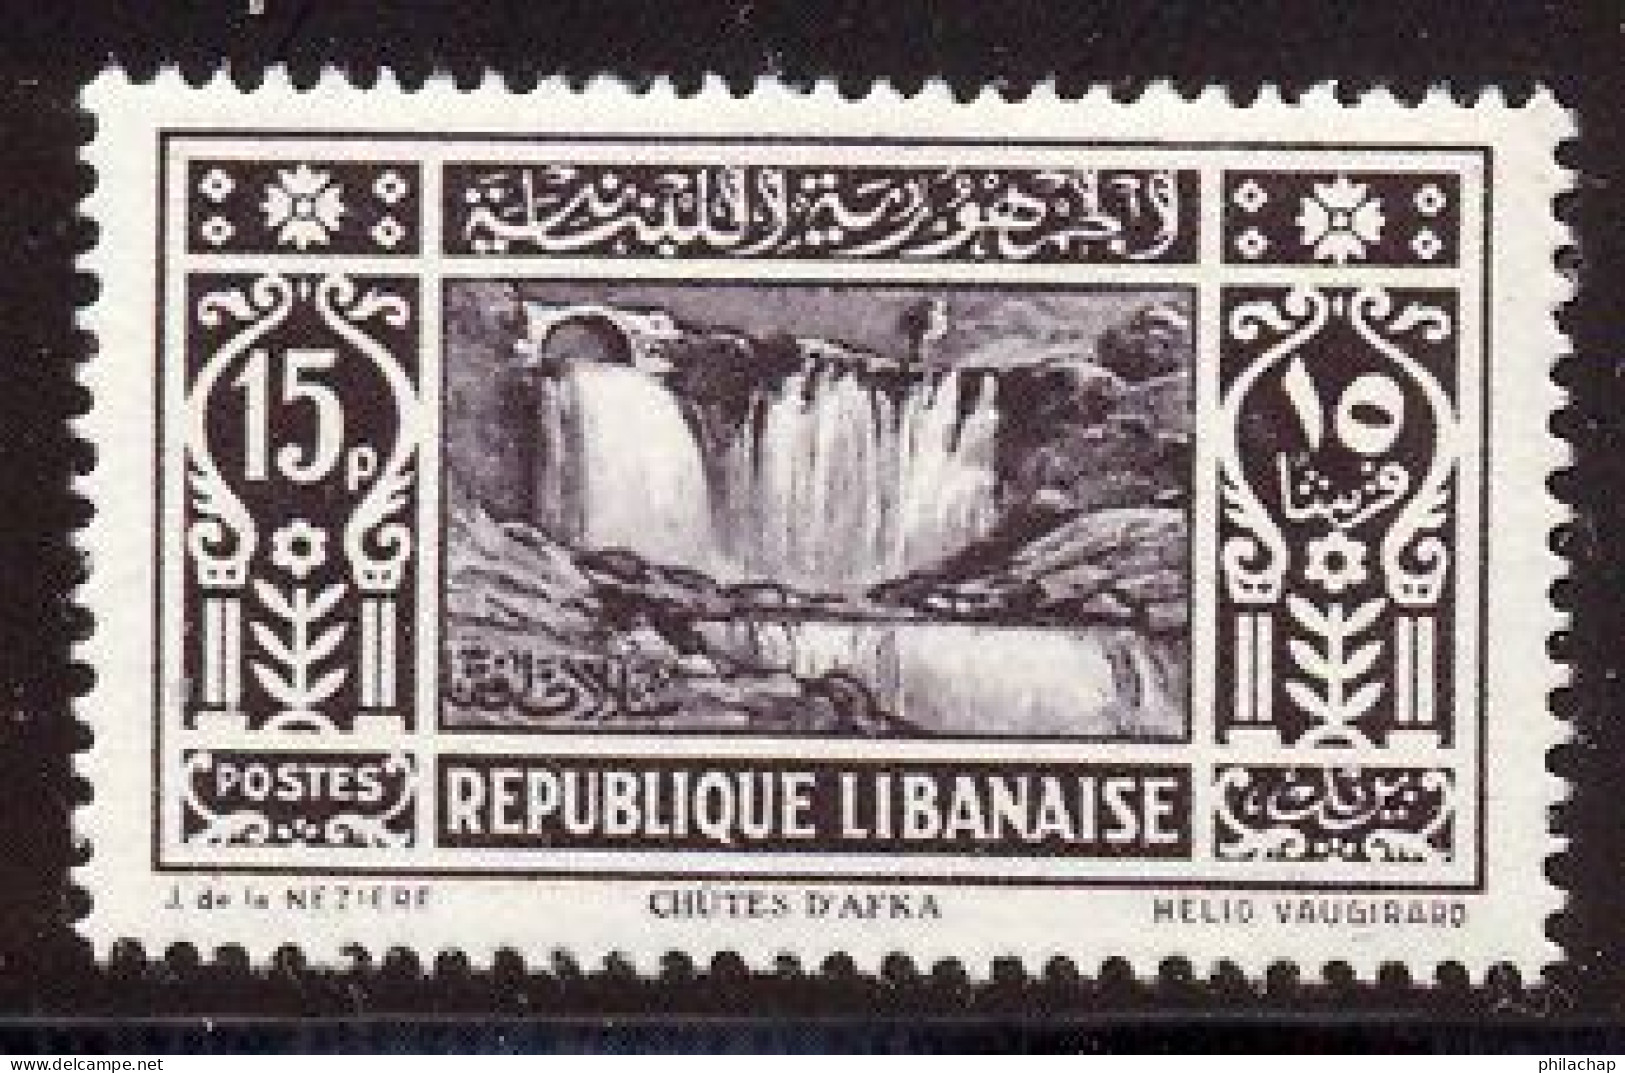 Grand Liban 1930 Yvert 145 ** TB Bord De Feuille - Unused Stamps